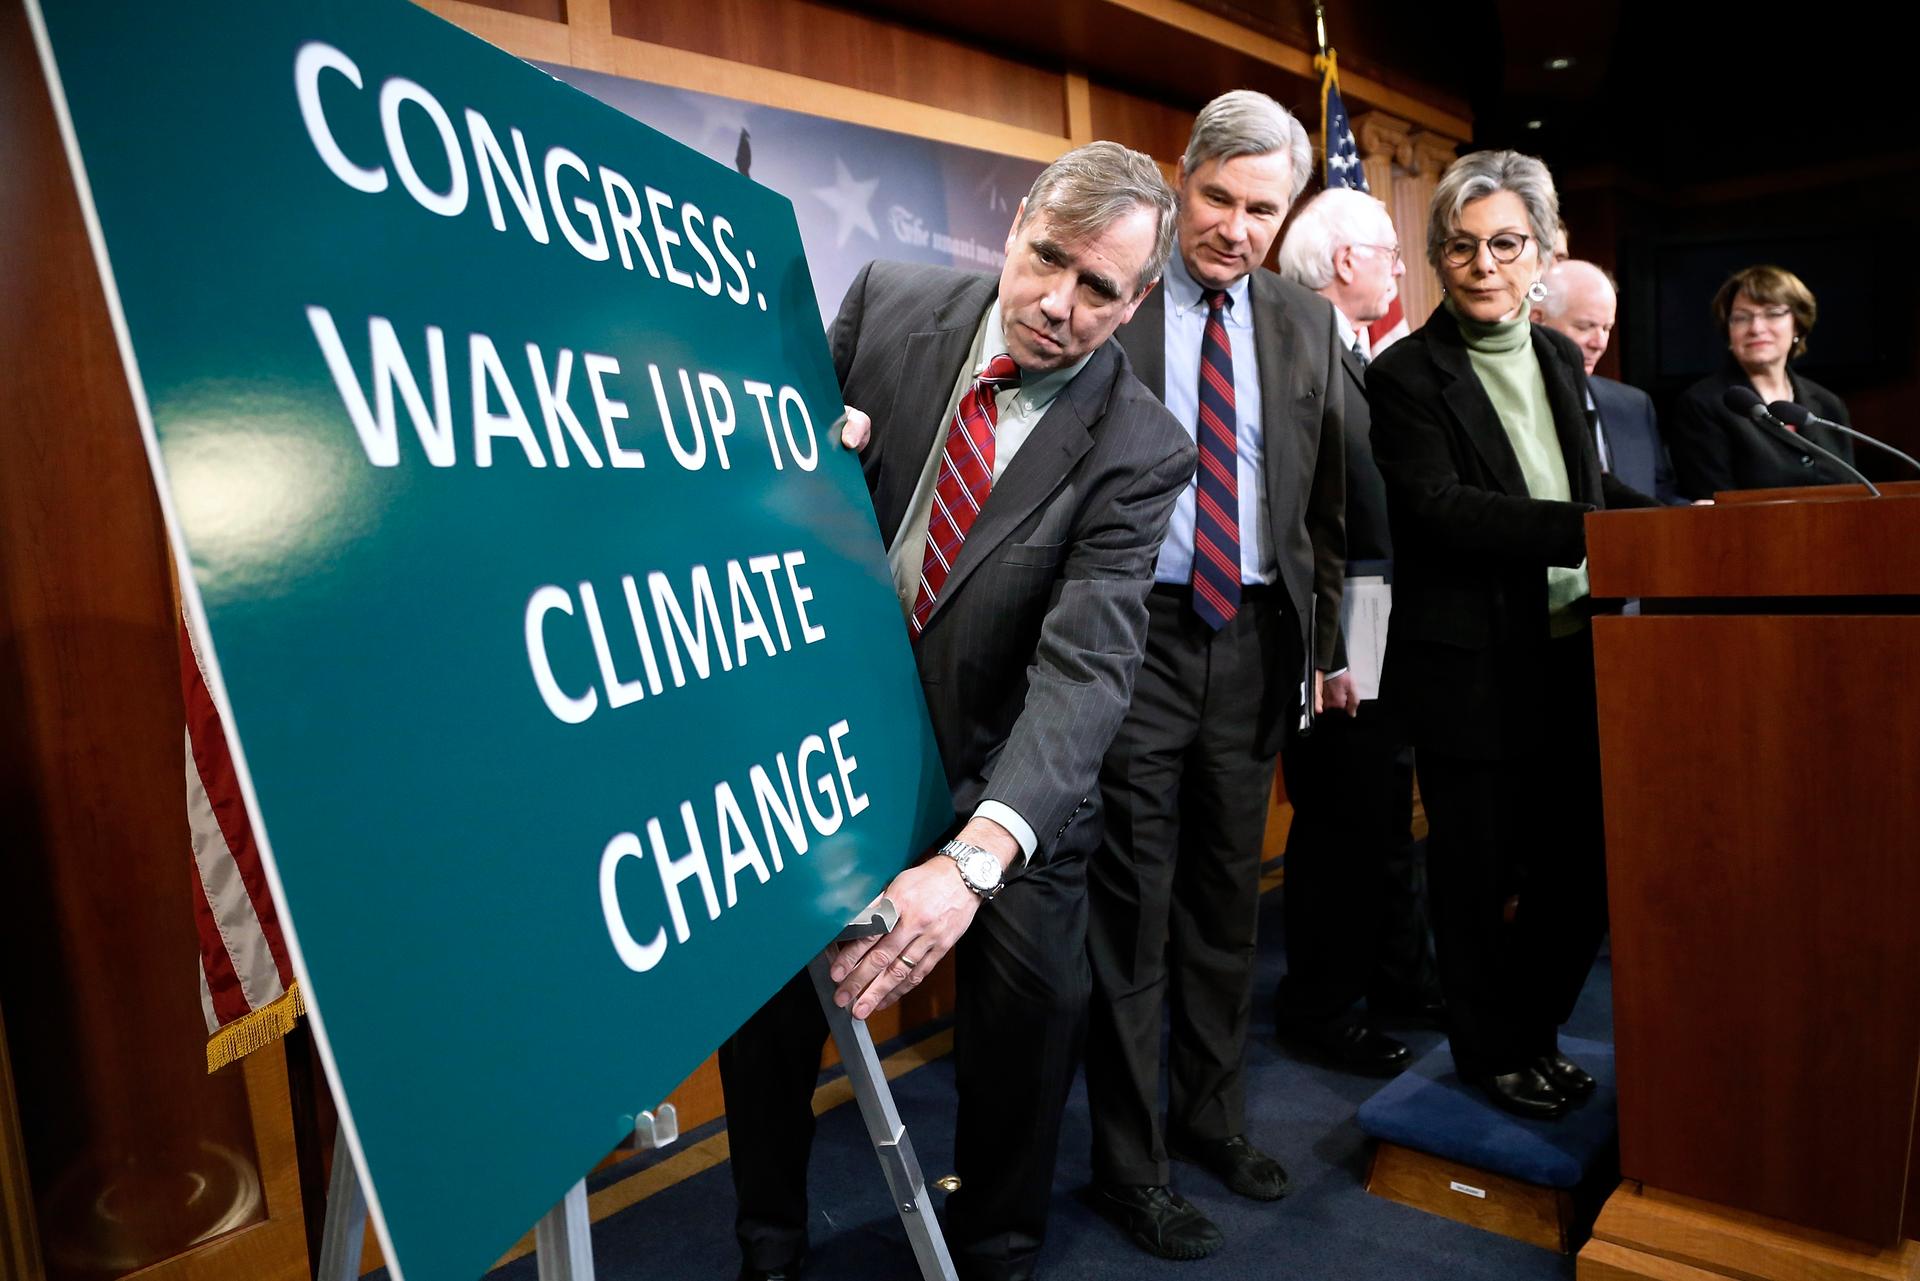 One senator sets up a sign at a press conference: 